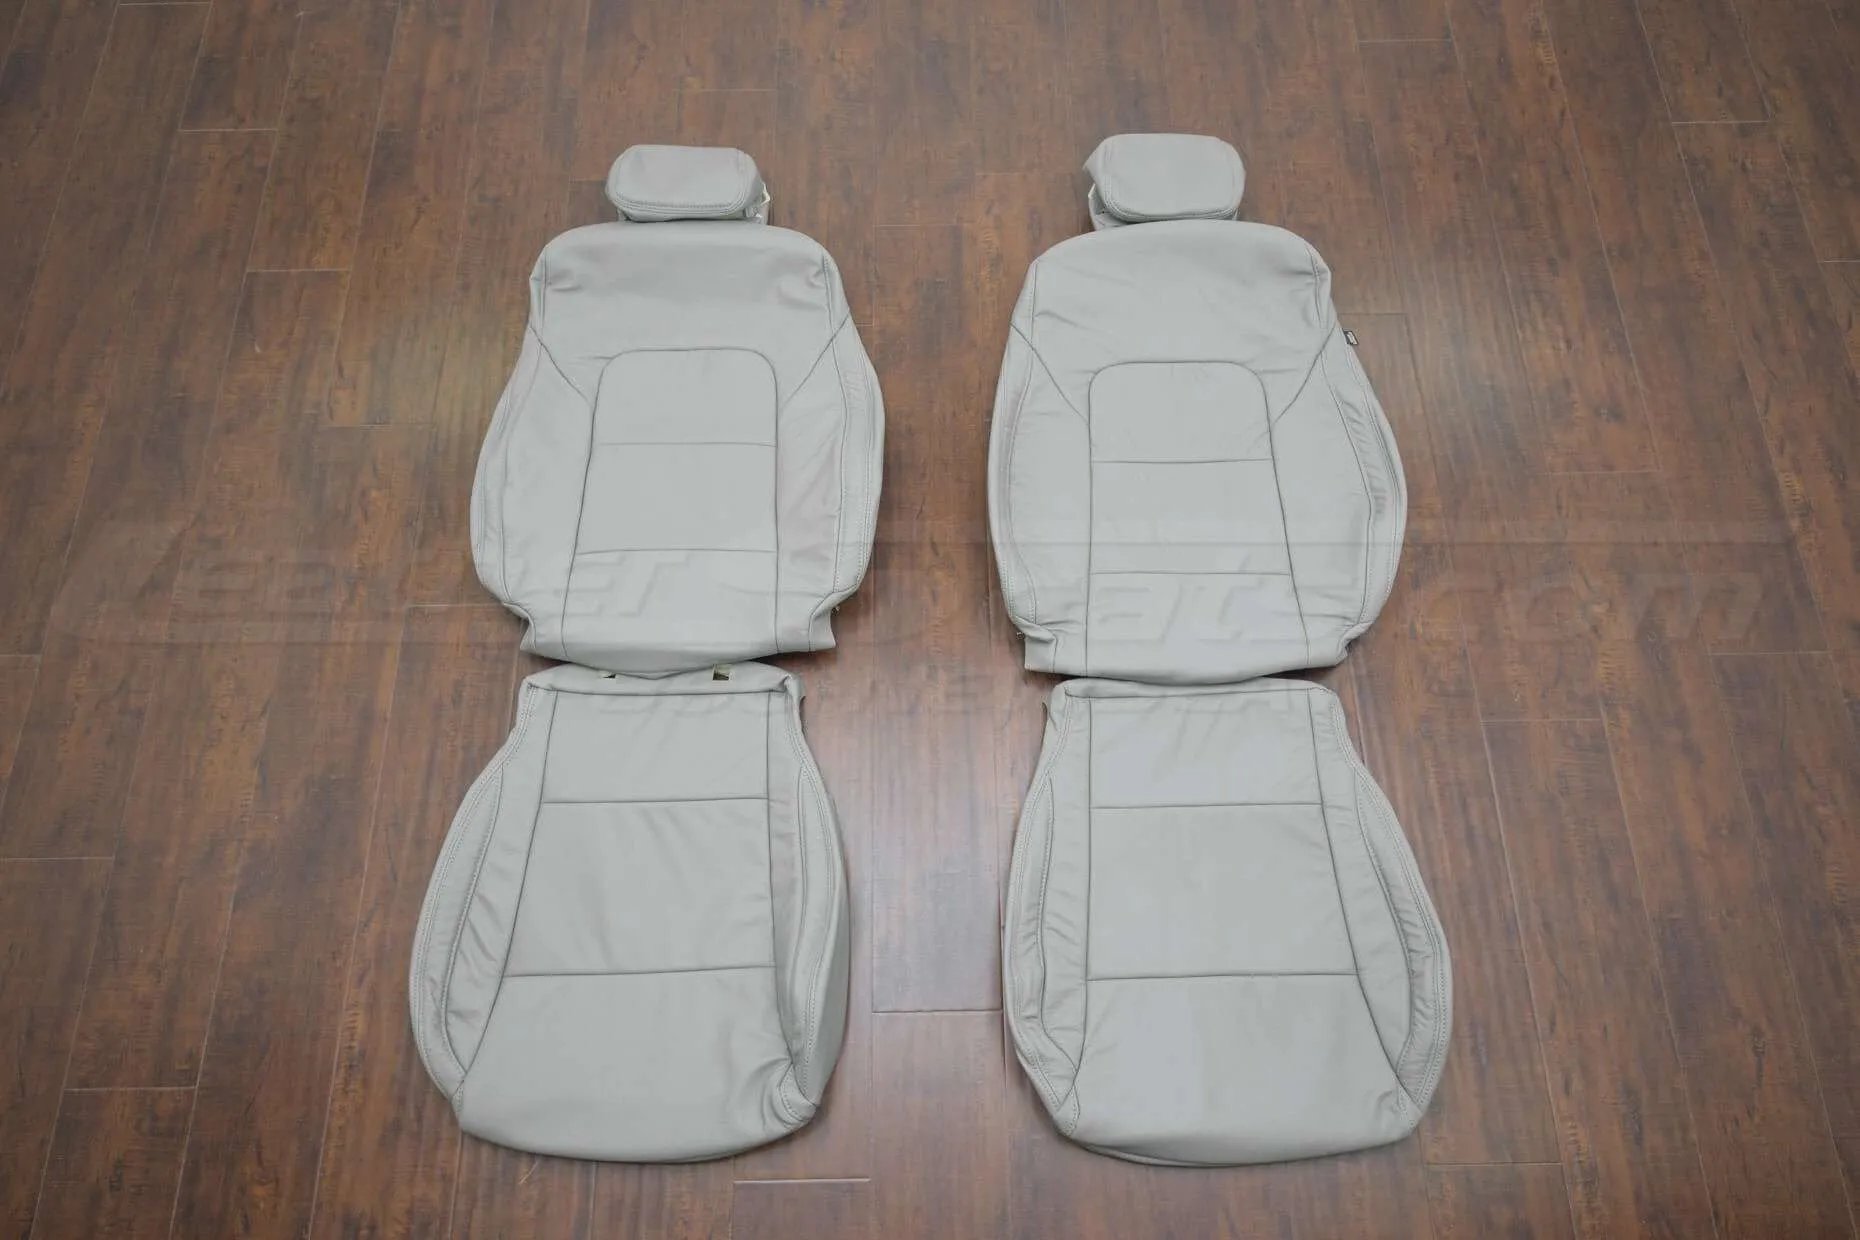 Honda Tucson Leather Seats - Ash - Front seats